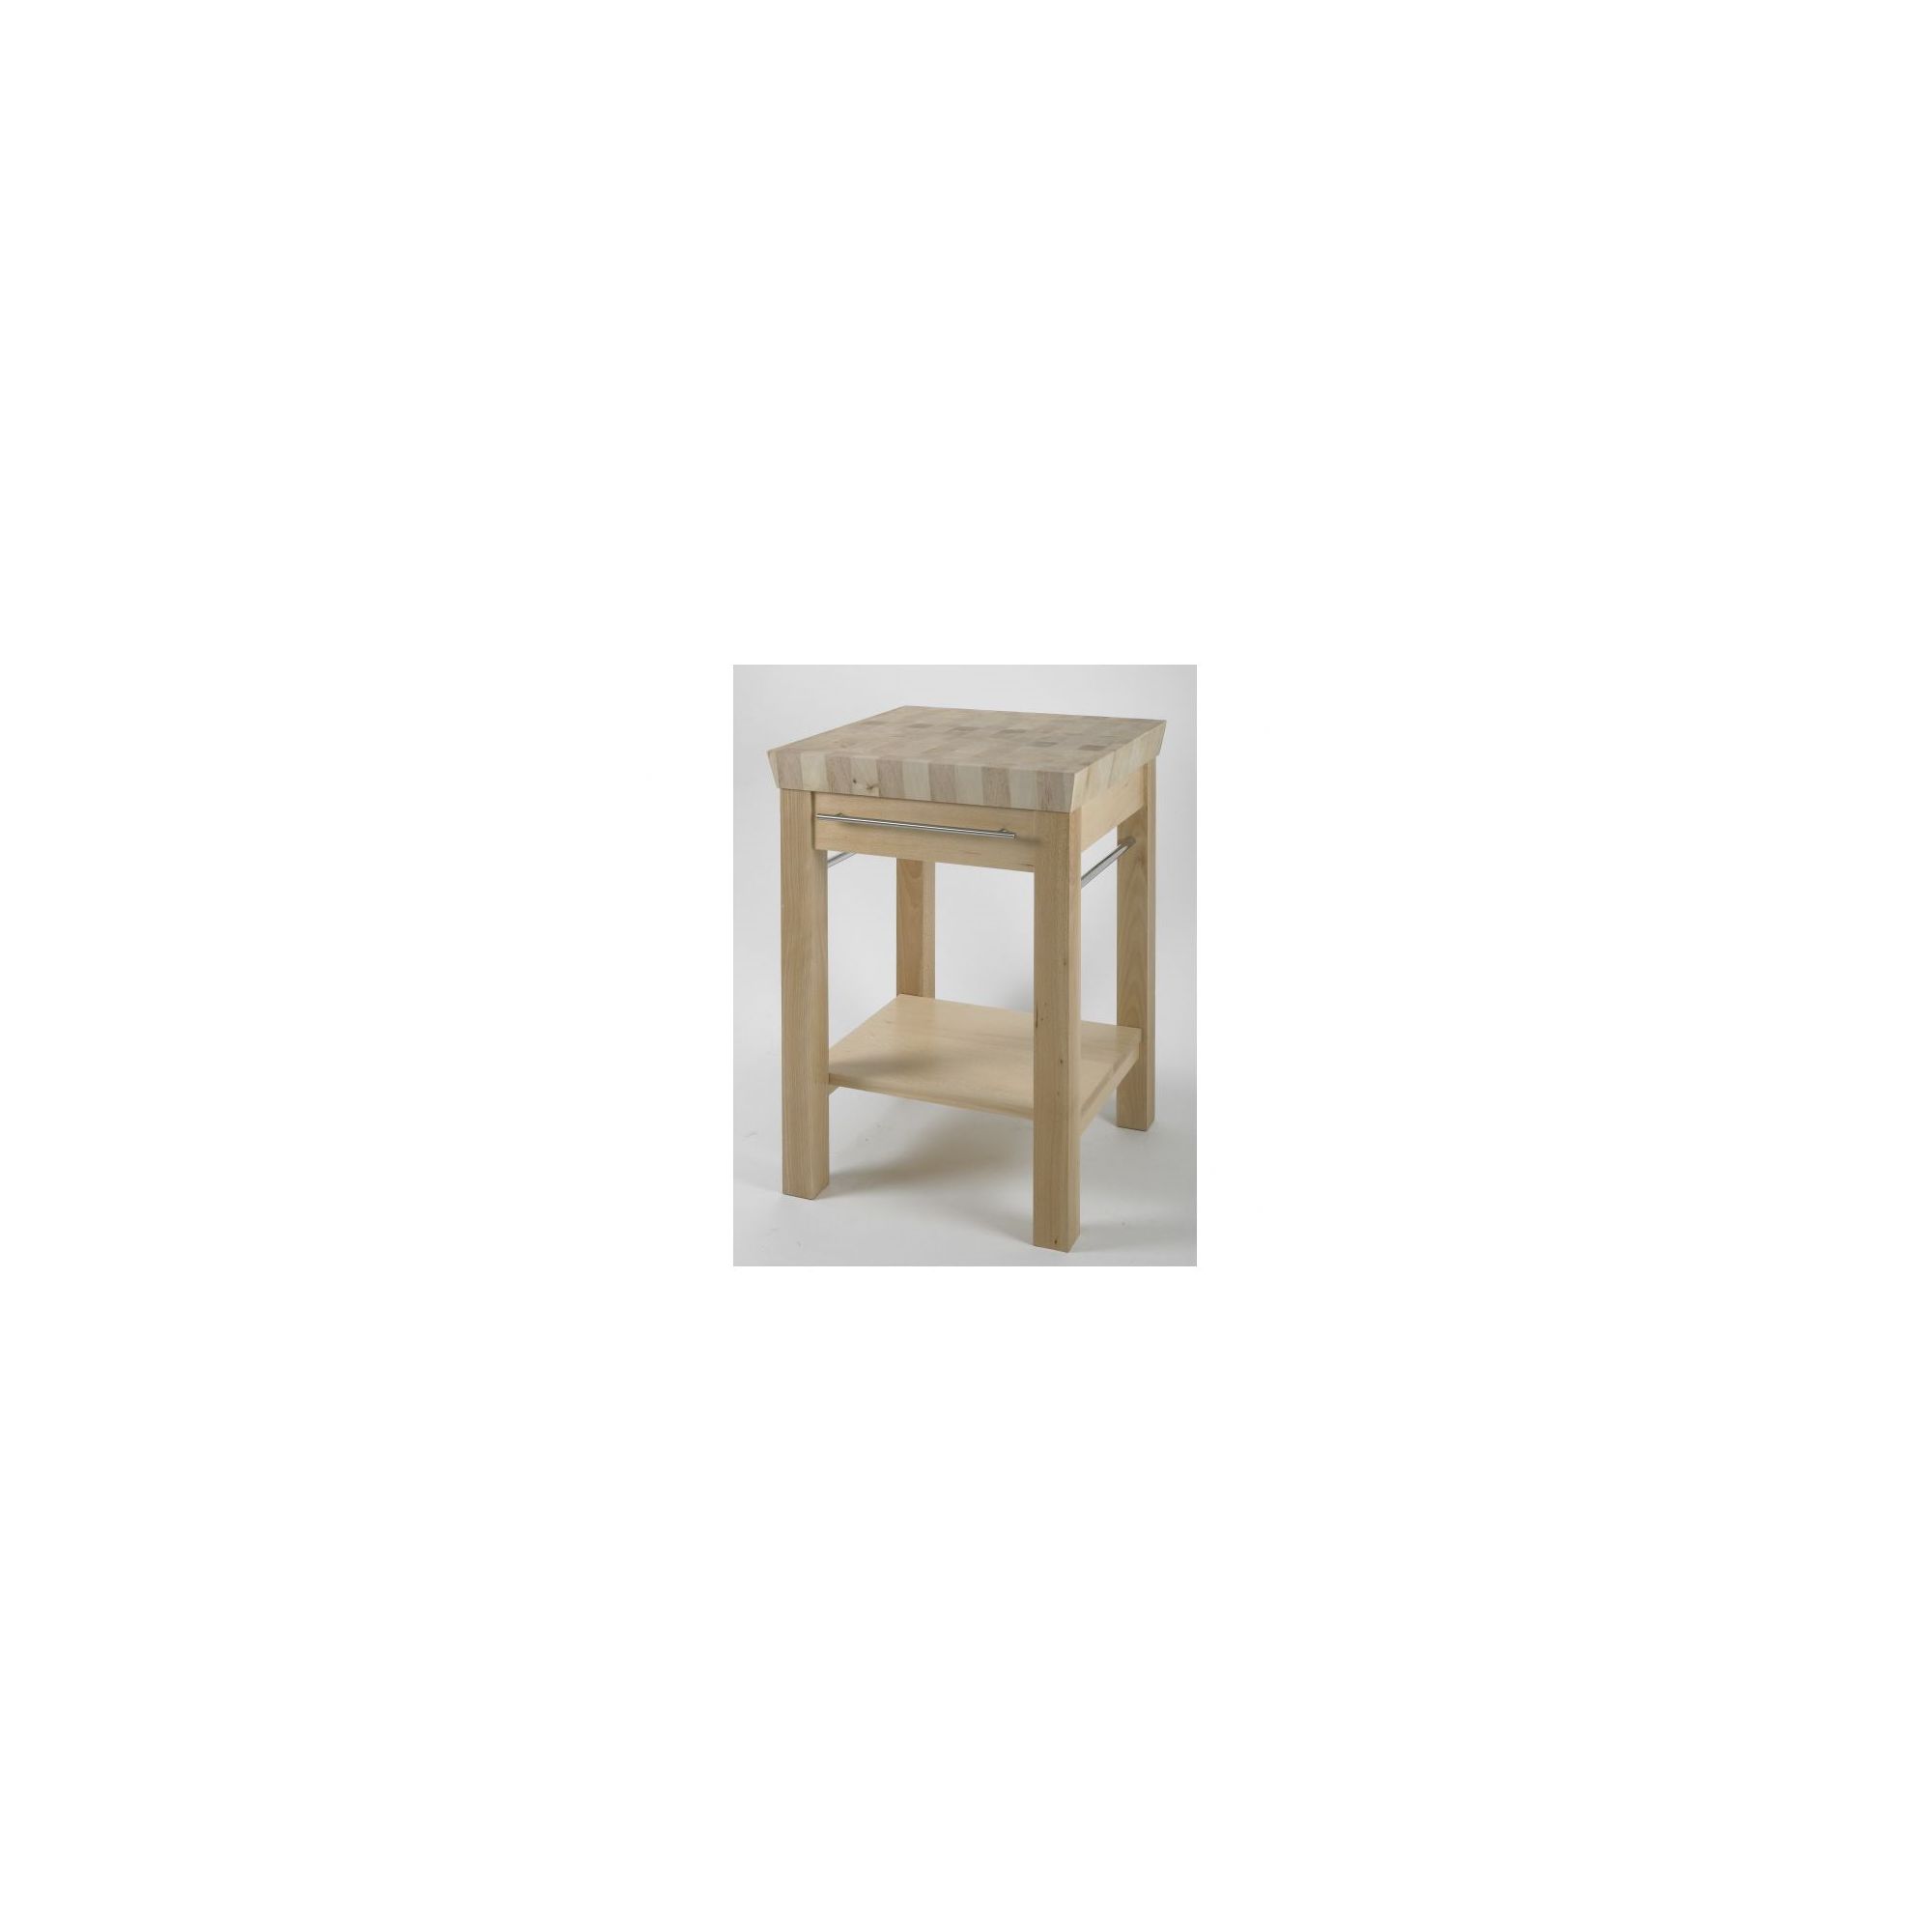 Chabret Occasional Furniture - 85cm X 80cm X 60cm at Tesco Direct